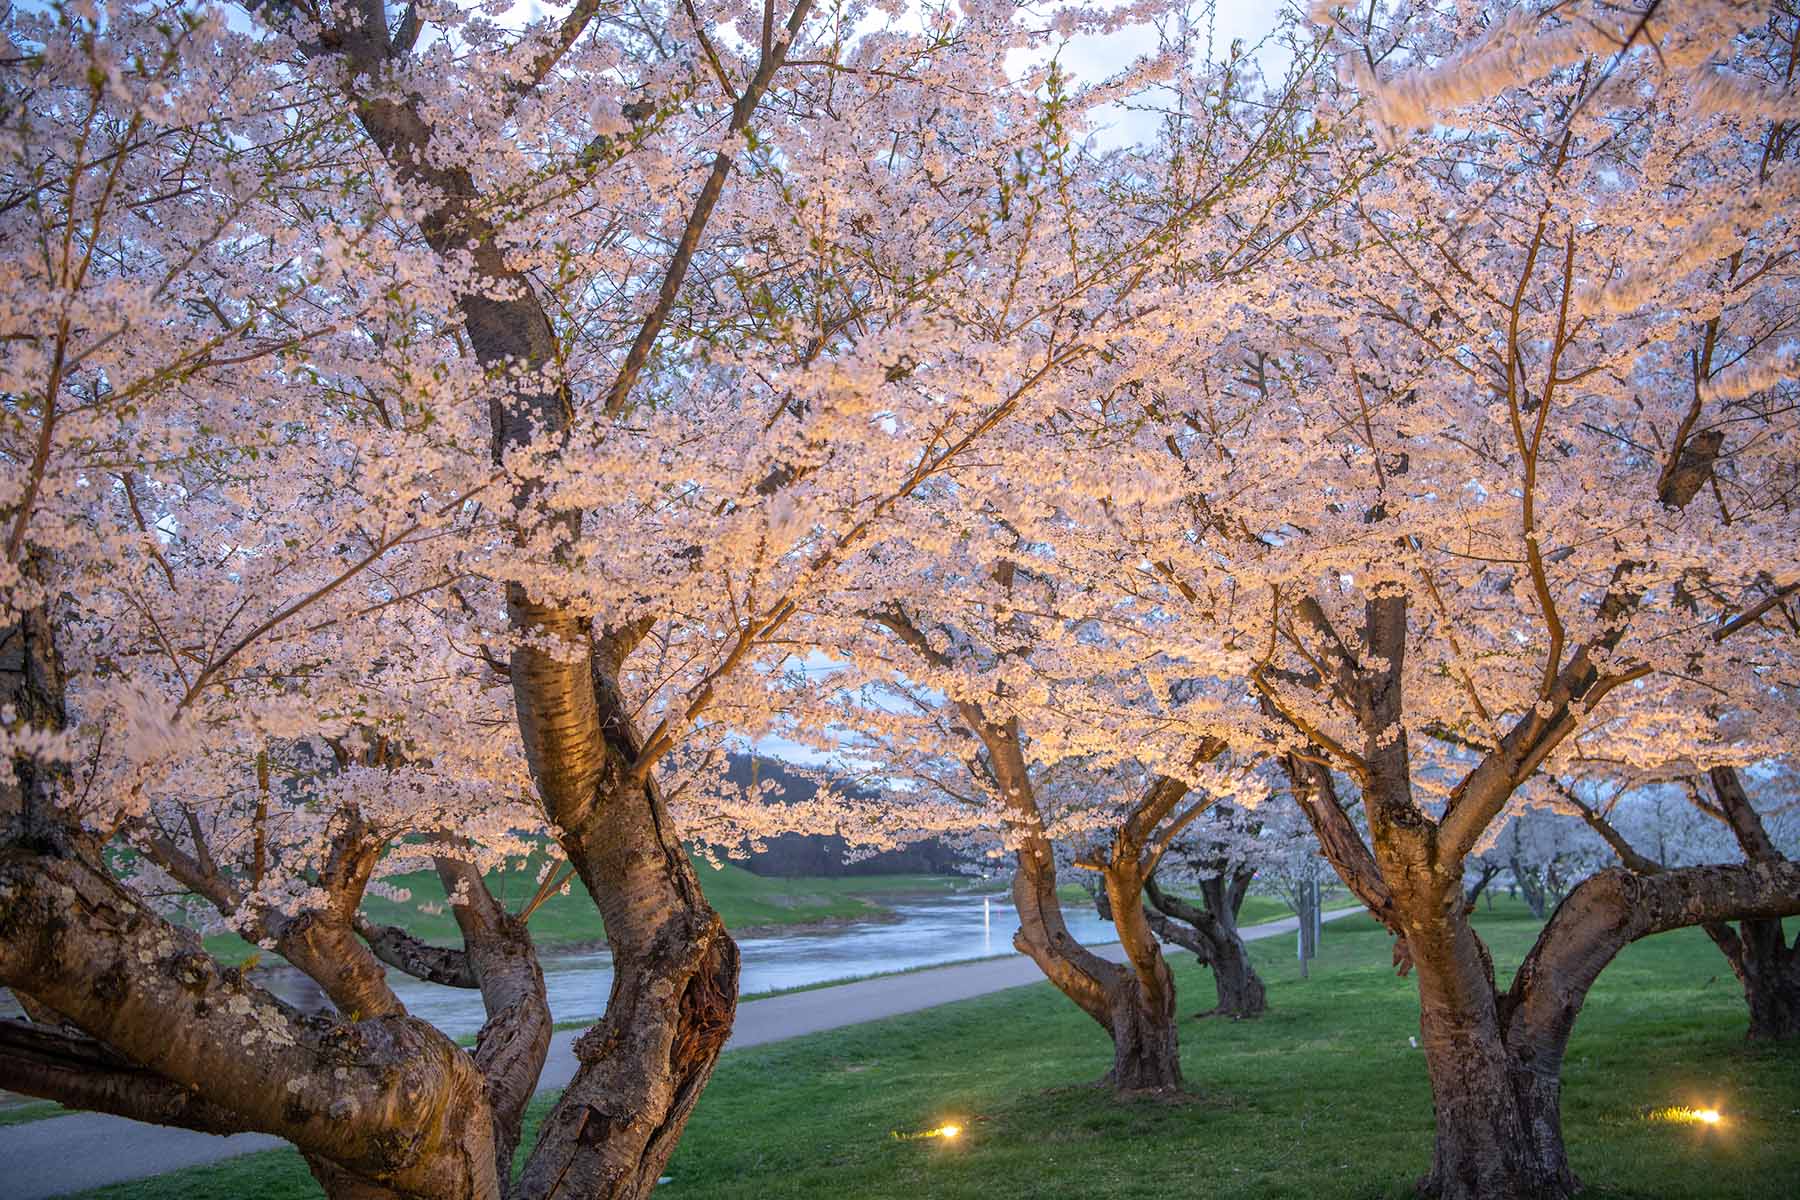 OHIO's renowned cherry blossom trees